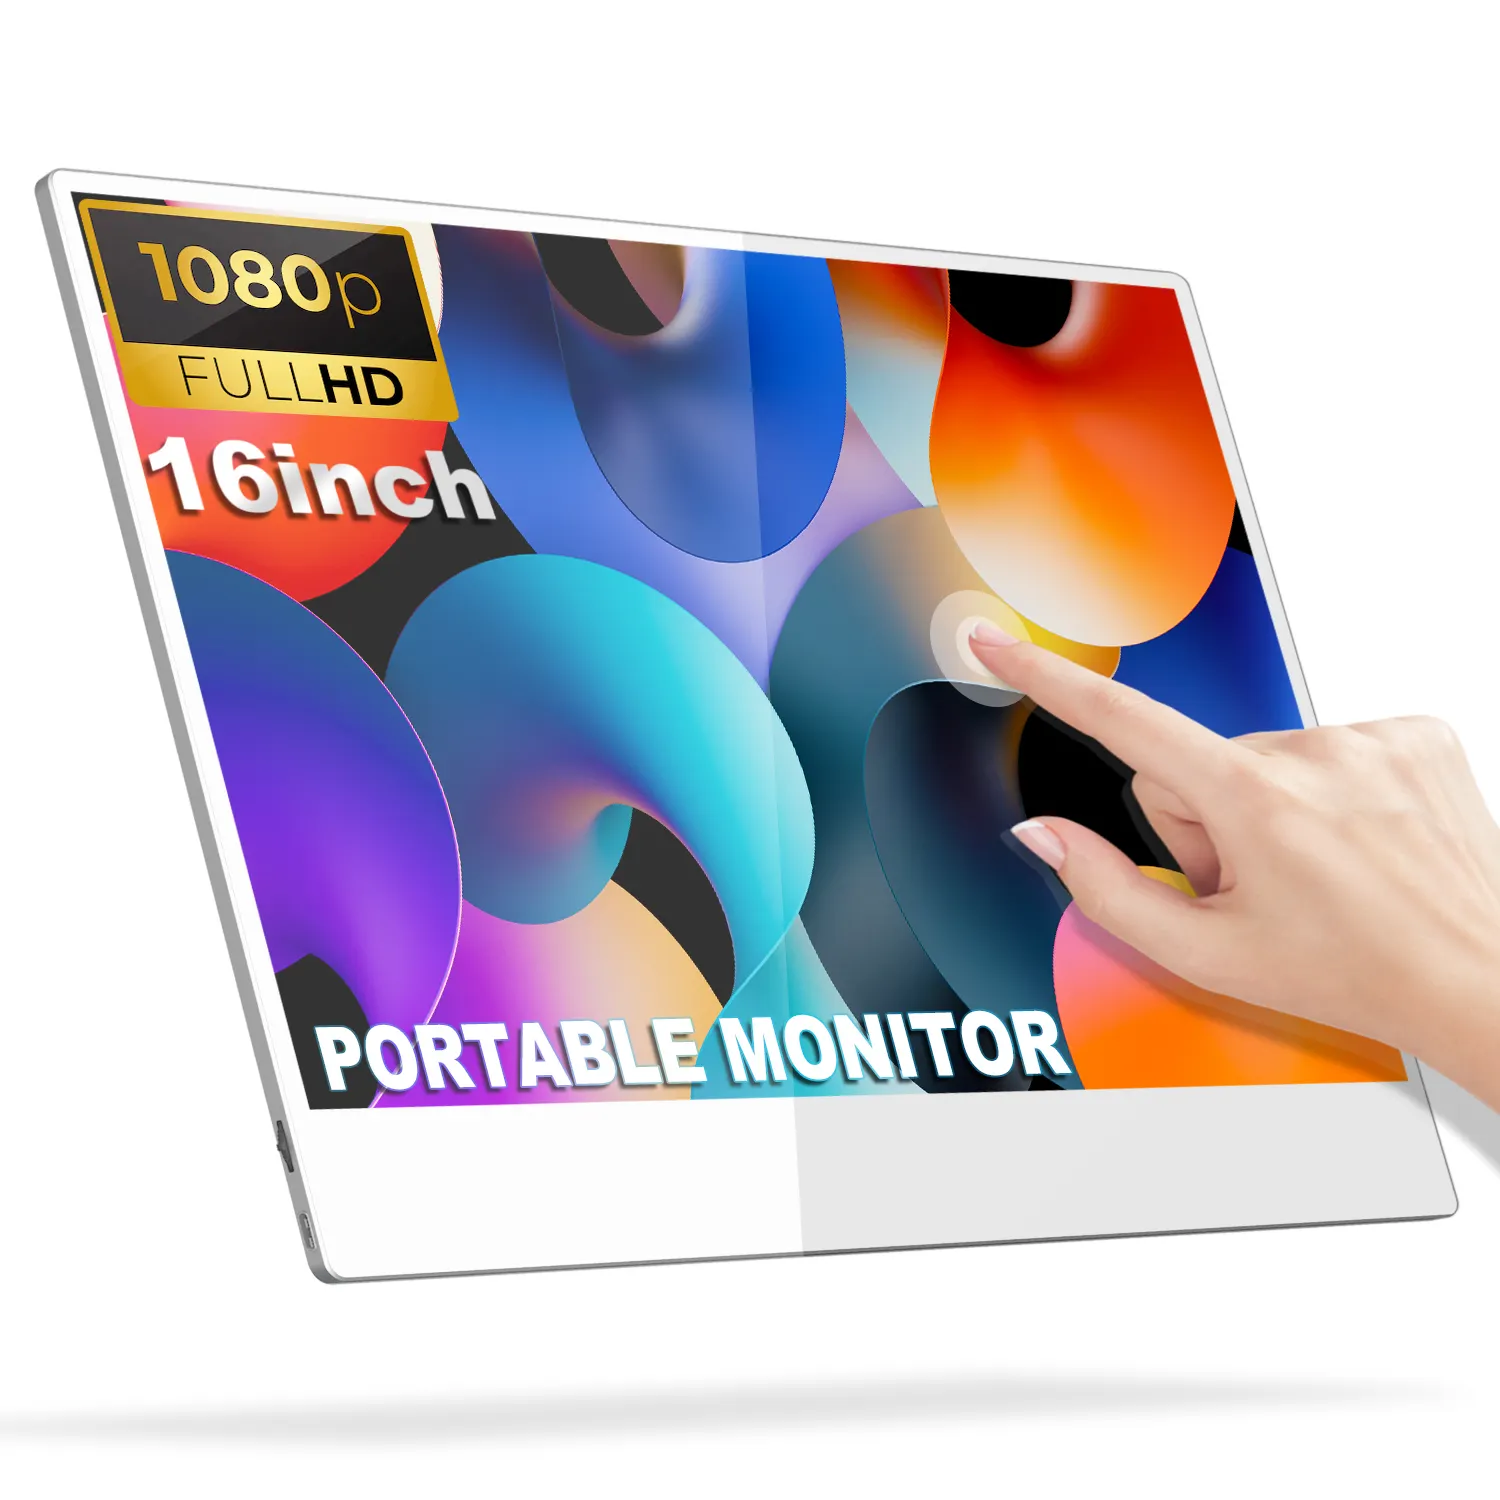 Fino Slim 16 polegada FHD Portátil Touchscreen PC Usb Monitor Oferece um Compact Lightweight Tela Portabilidade LCD para Laptop